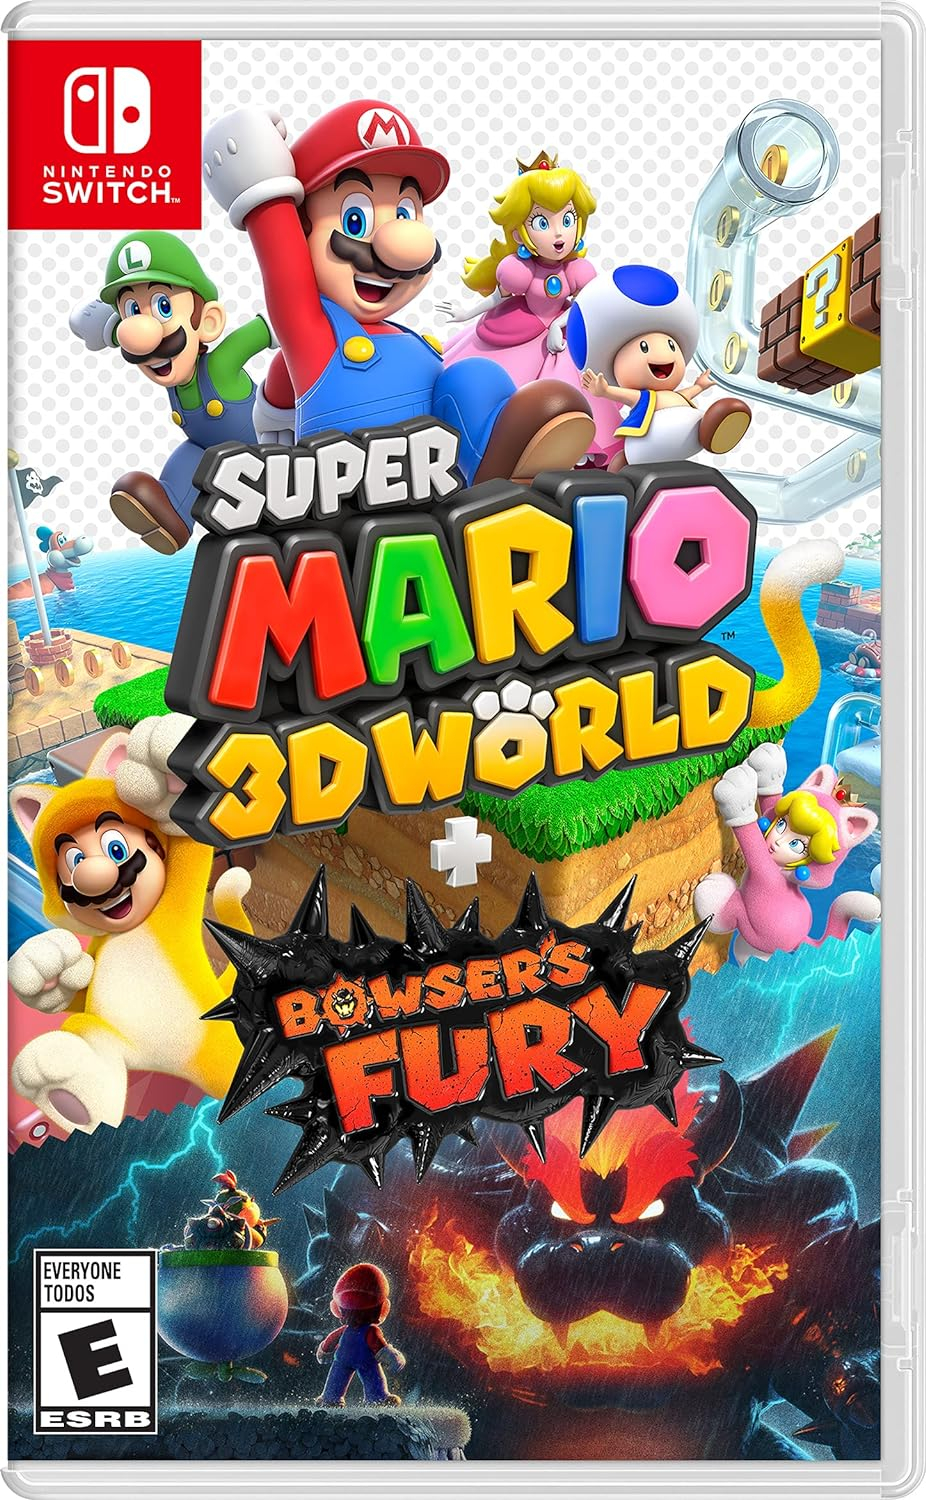 Super Mario 3D World + Bowsers Fury - US Version